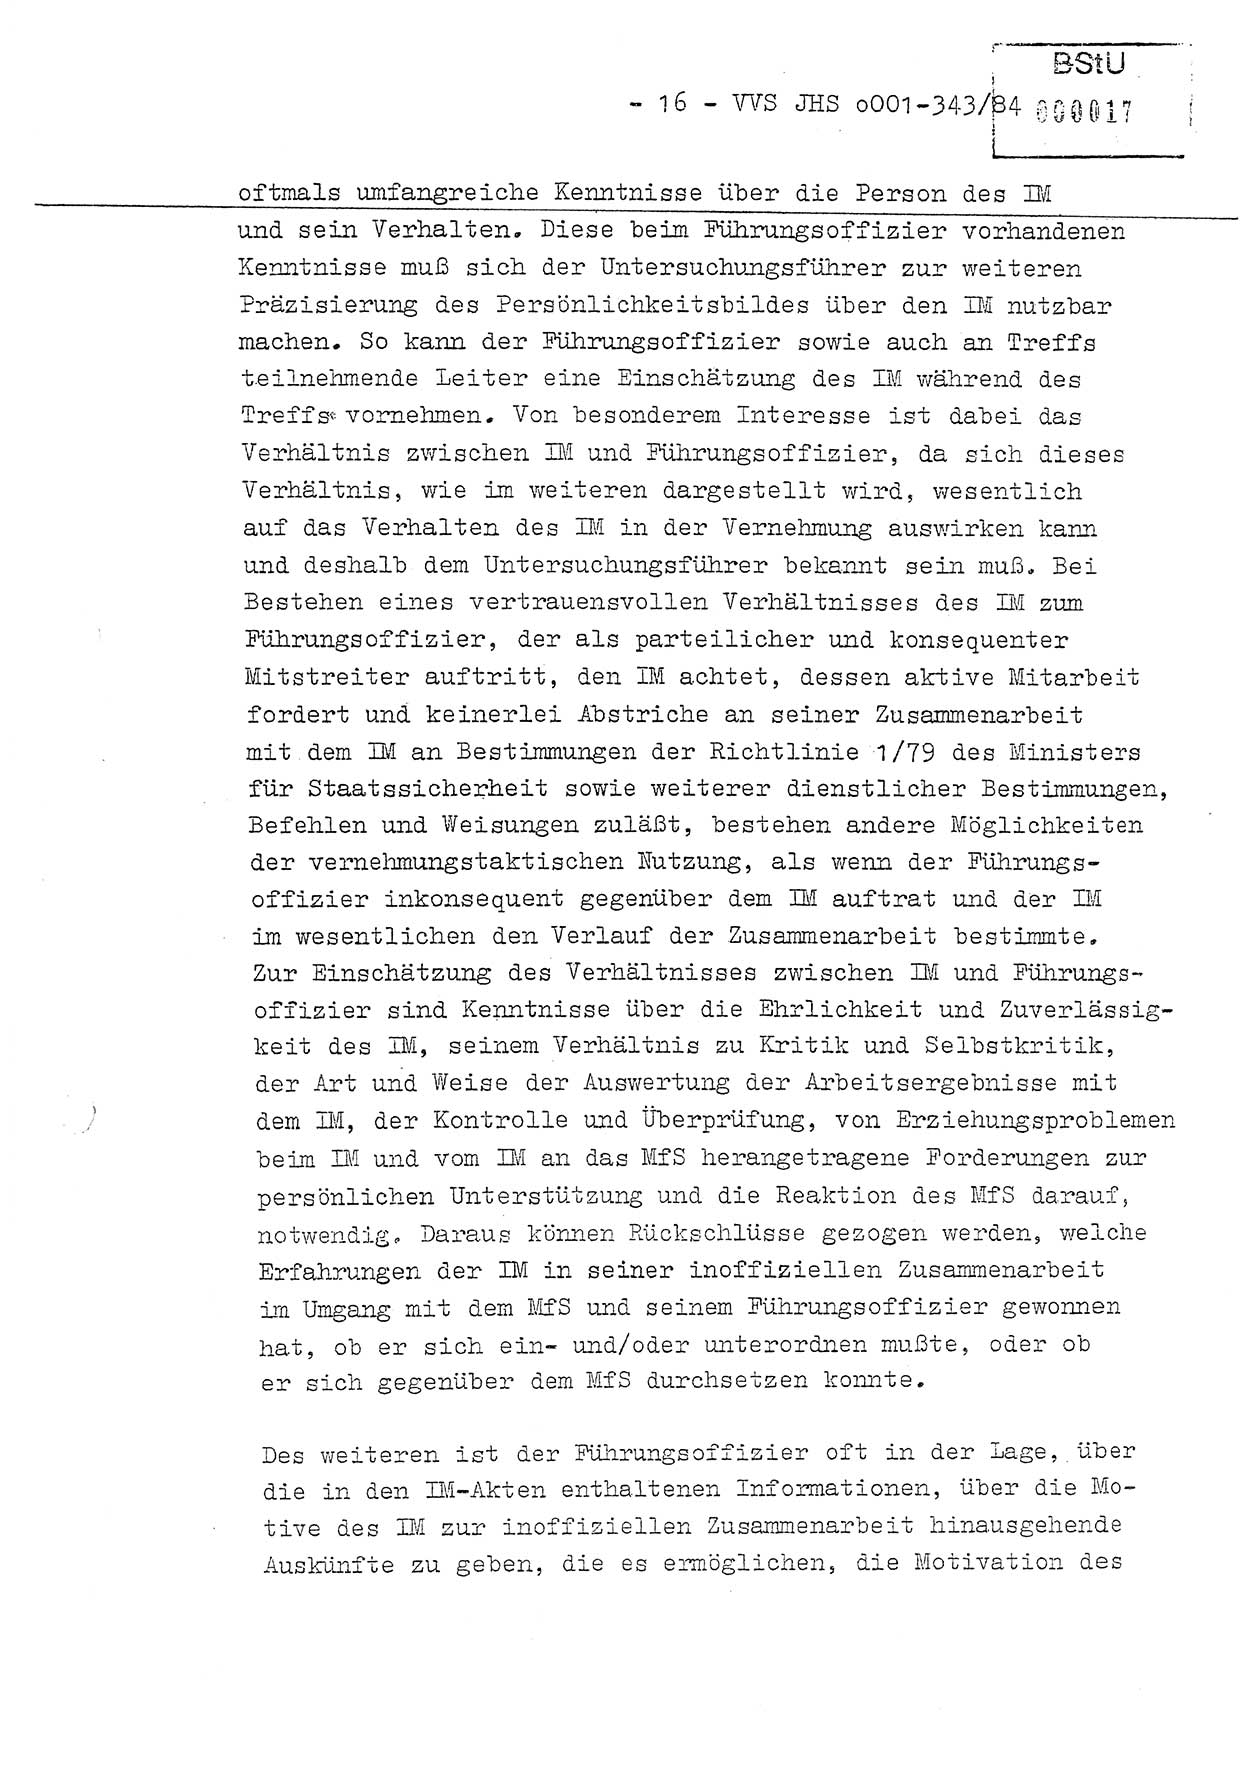 Diplomarbeit, Oberleutnant Bernd Michael (HA Ⅸ/5), Oberleutnant Peter Felber (HA IX/5), Ministerium für Staatssicherheit (MfS) [Deutsche Demokratische Republik (DDR)], Juristische Hochschule (JHS), Vertrauliche Verschlußsache (VVS) o001-343/84, Potsdam 1985, Seite 16 (Dipl.-Arb. MfS DDR JHS VVS o001-343/84 1985, S. 16)